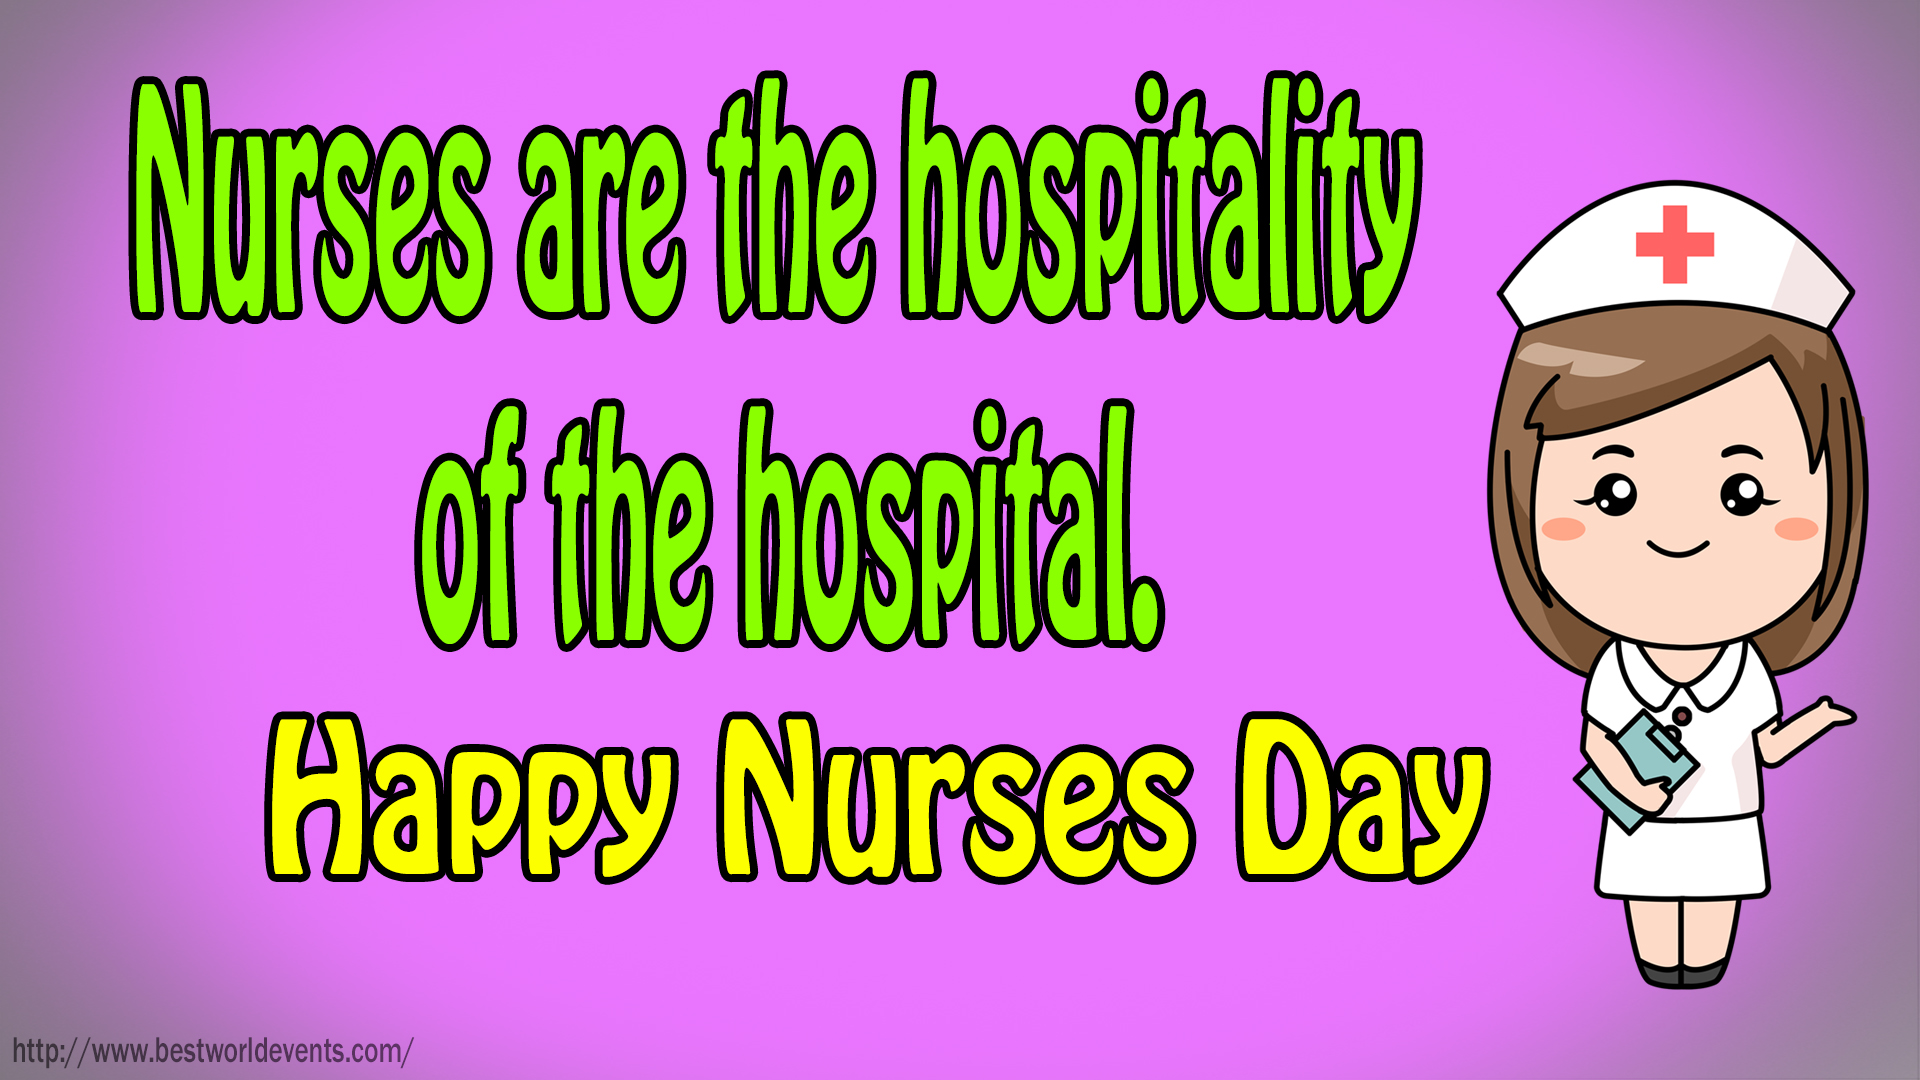 Happy Nurses day image